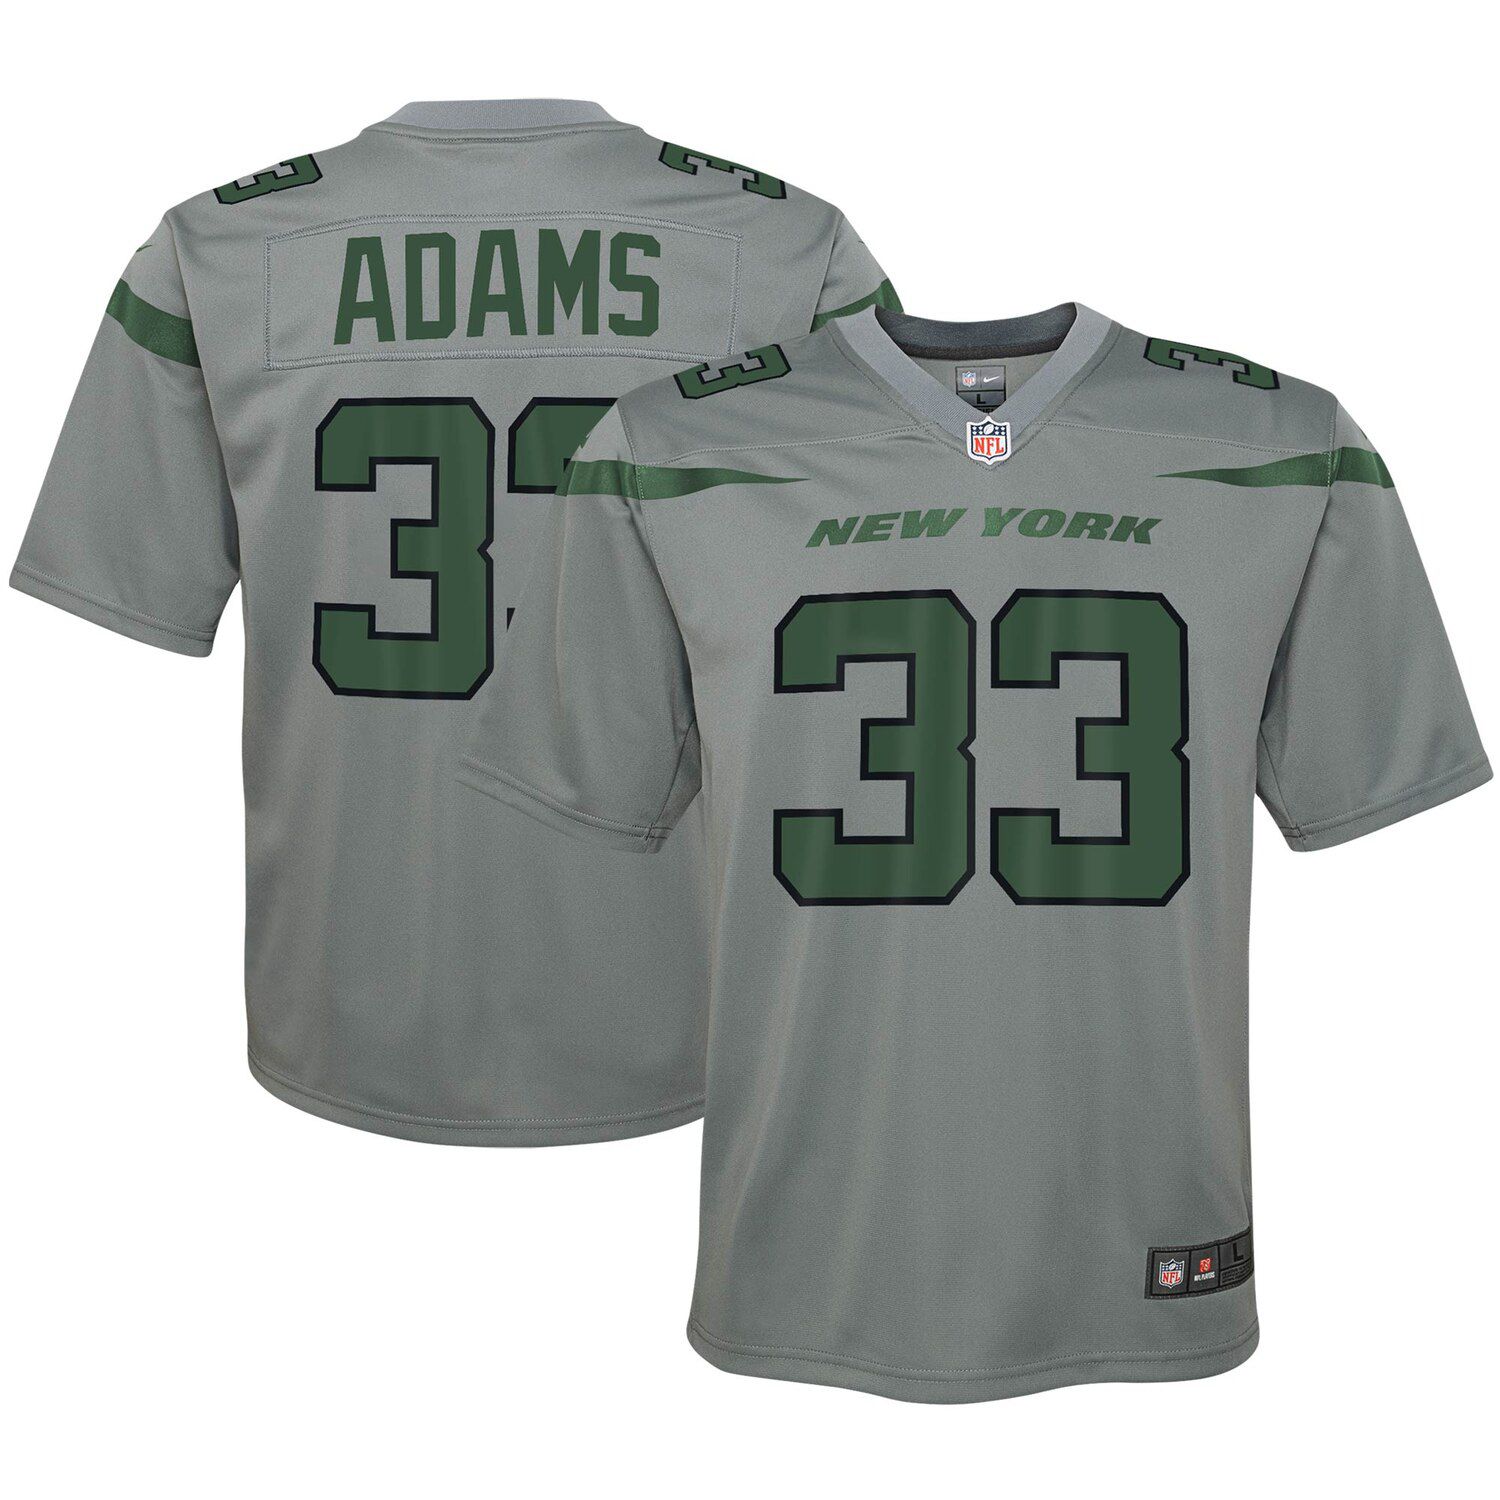 jamal adams jersey stitched